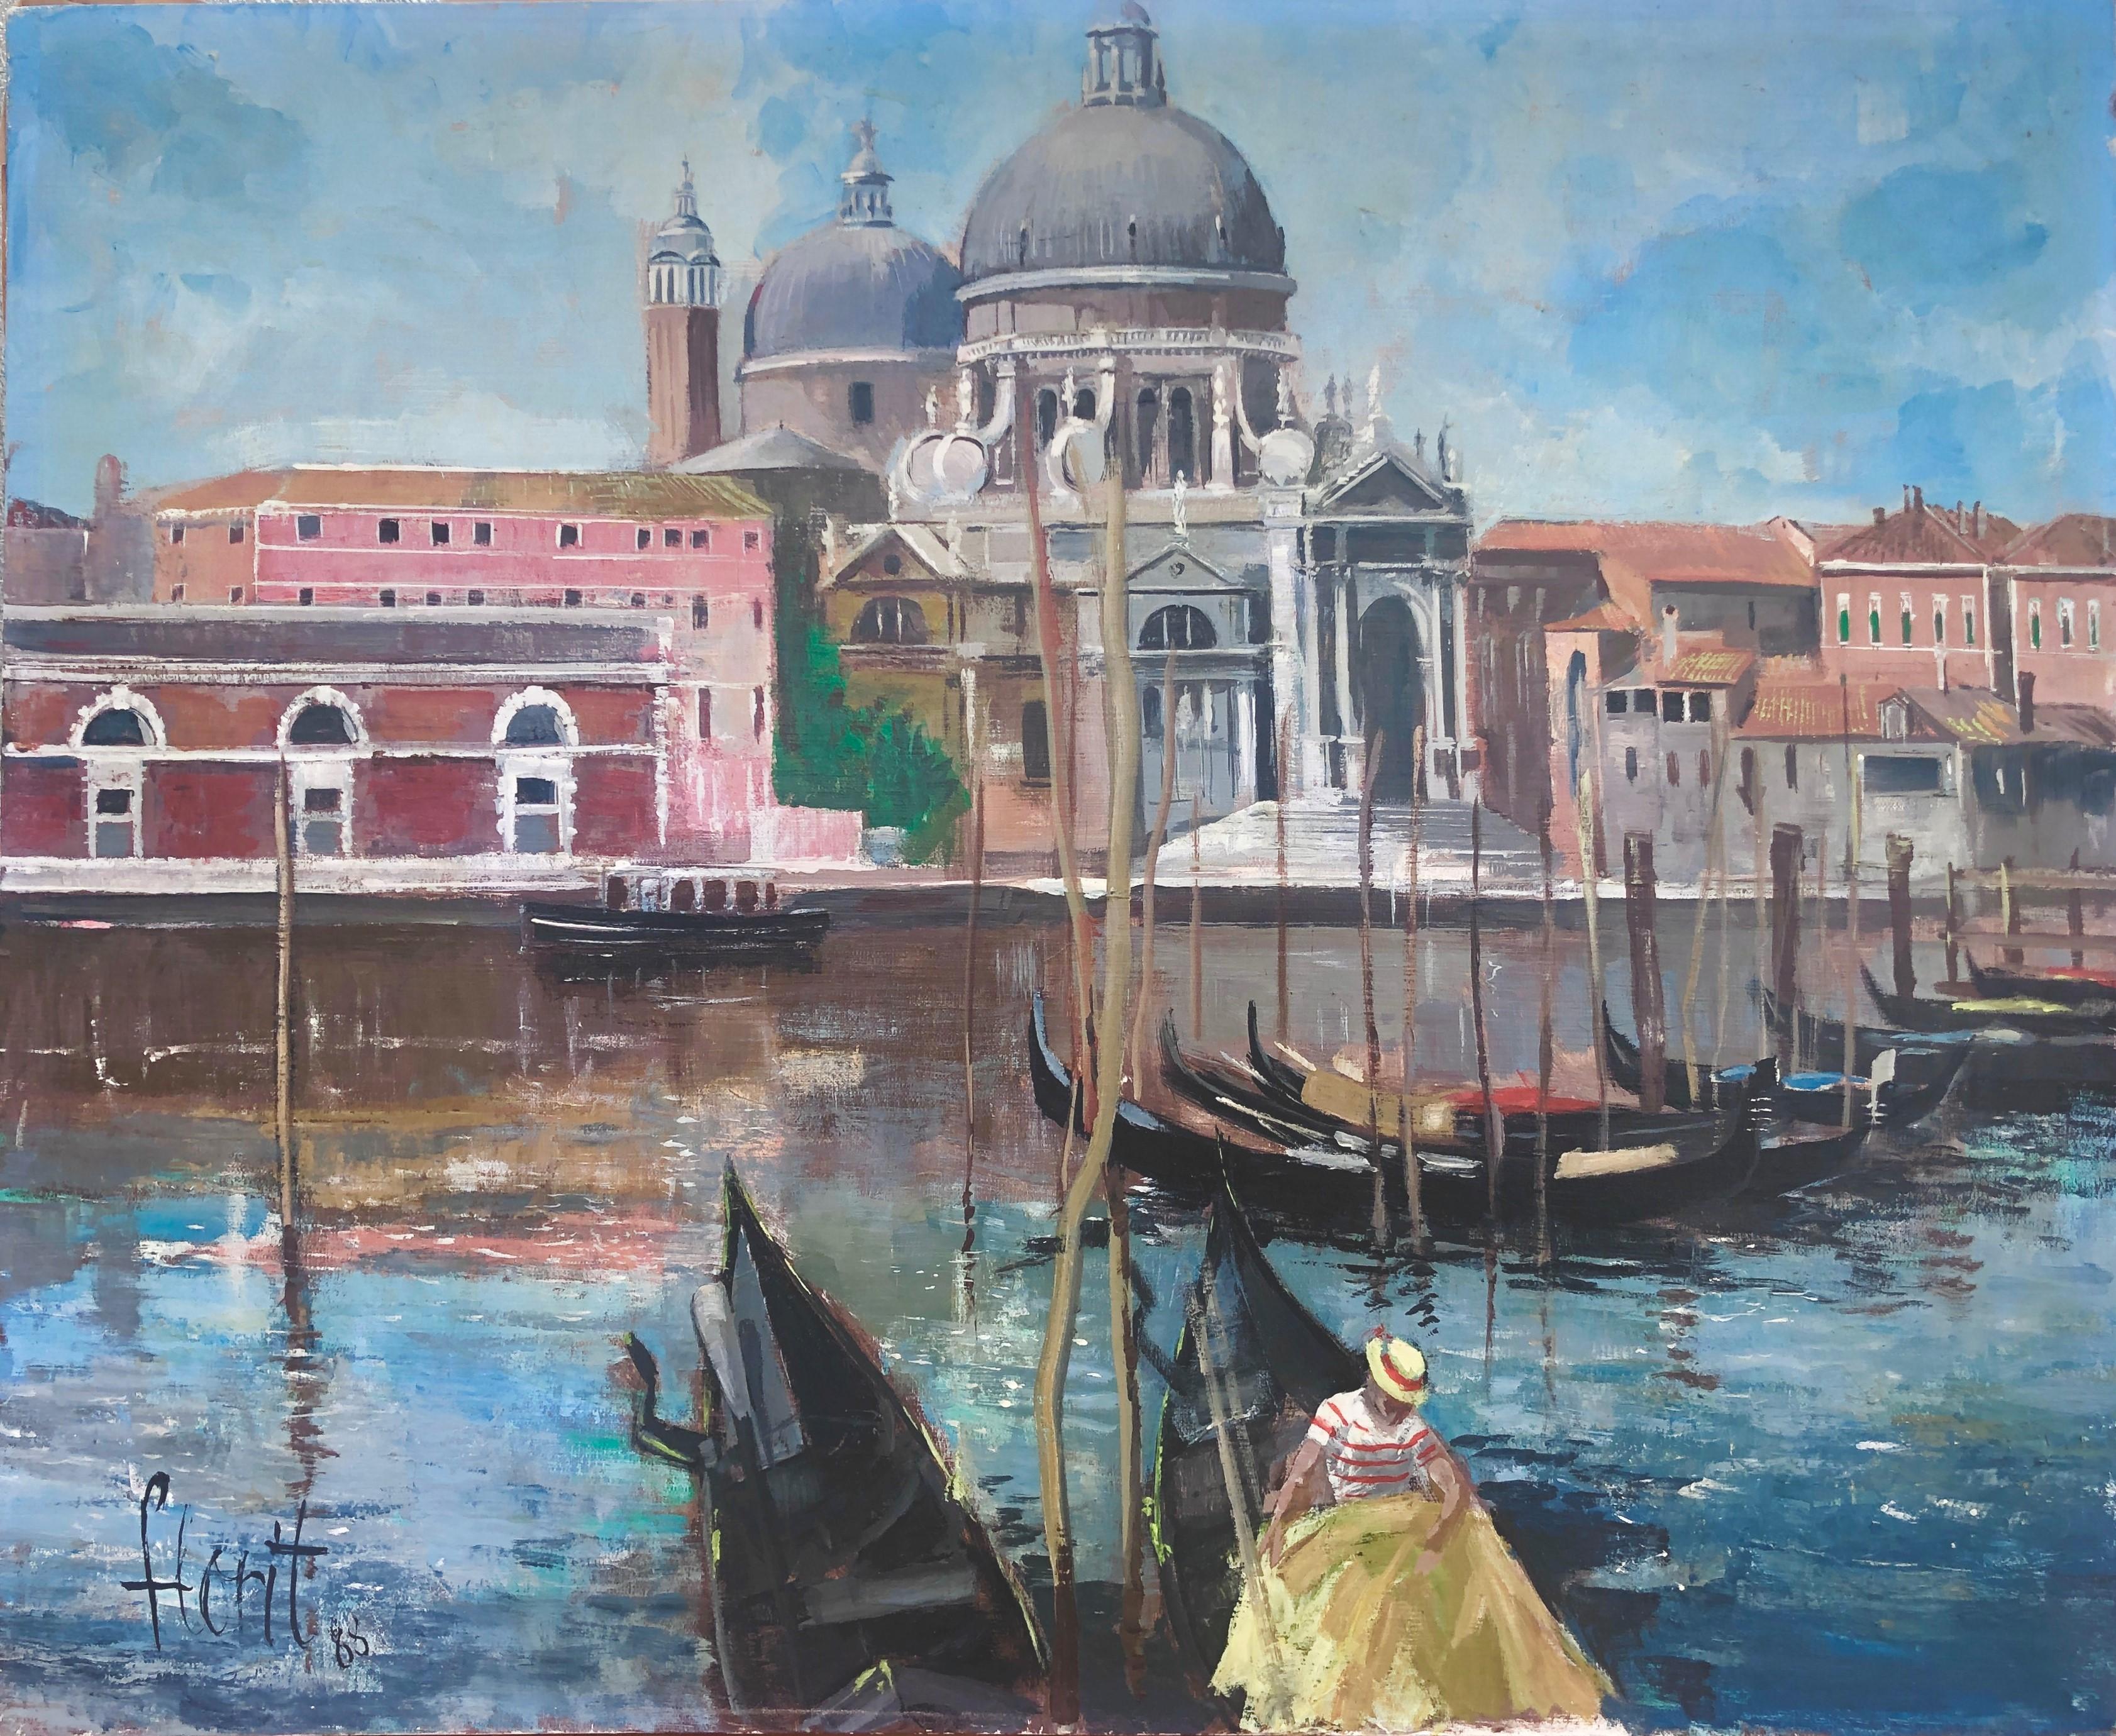 Jose Luis Florit Rodero Landscape Painting - Gondolas in Venice Italy oil on canvas painting